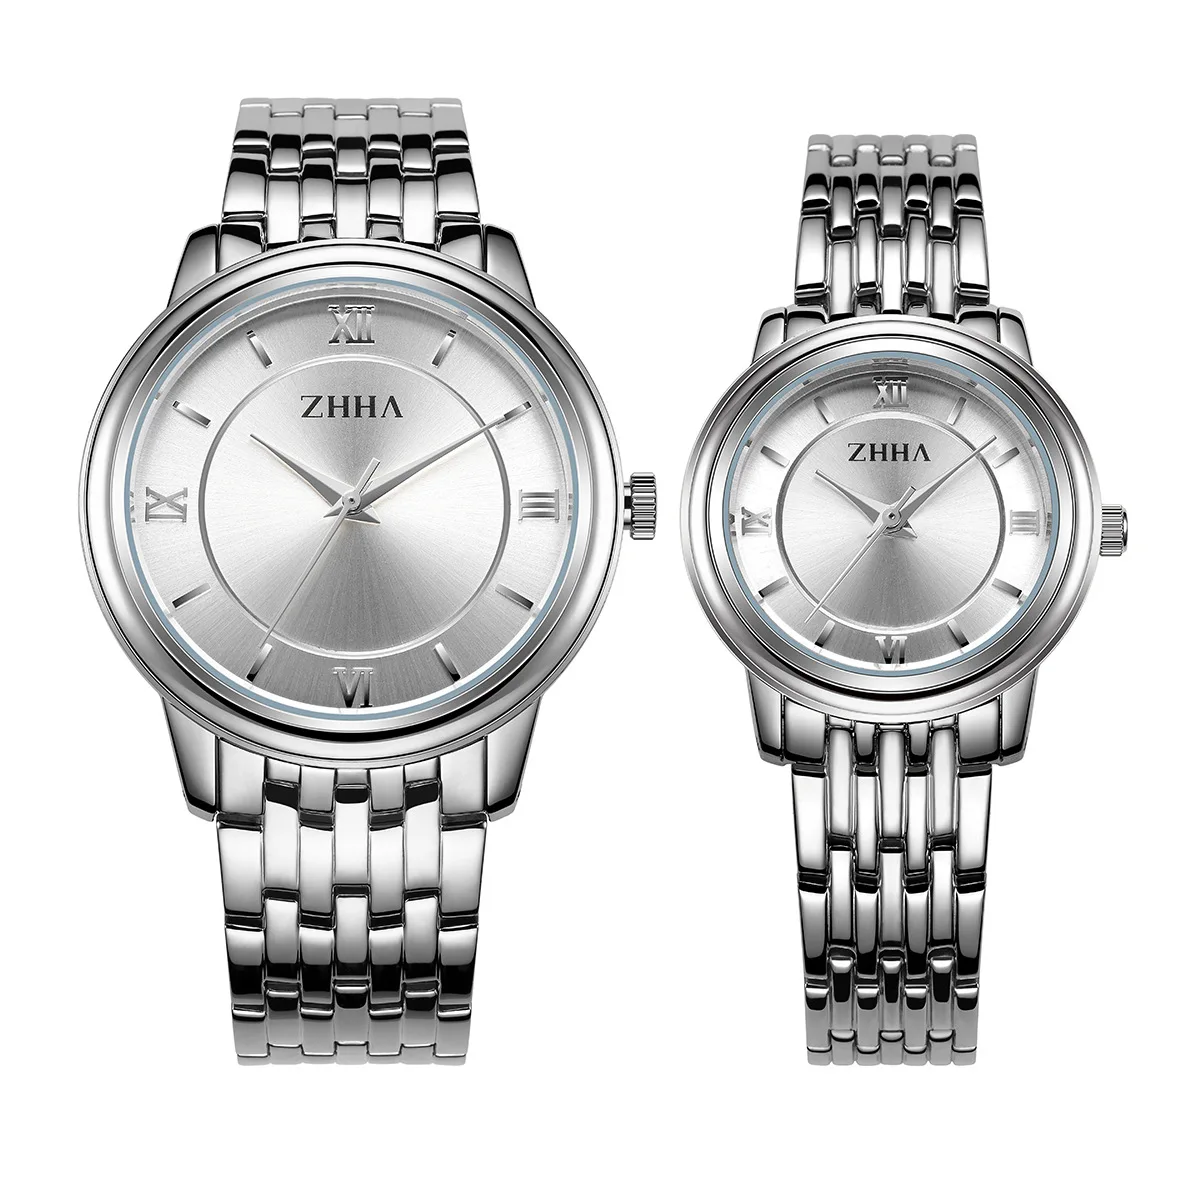 Zhihao New Fashion Watch Simple Korean Steel Band Watch Fashion Roman Digital Leisure Business Watch Men enlarge